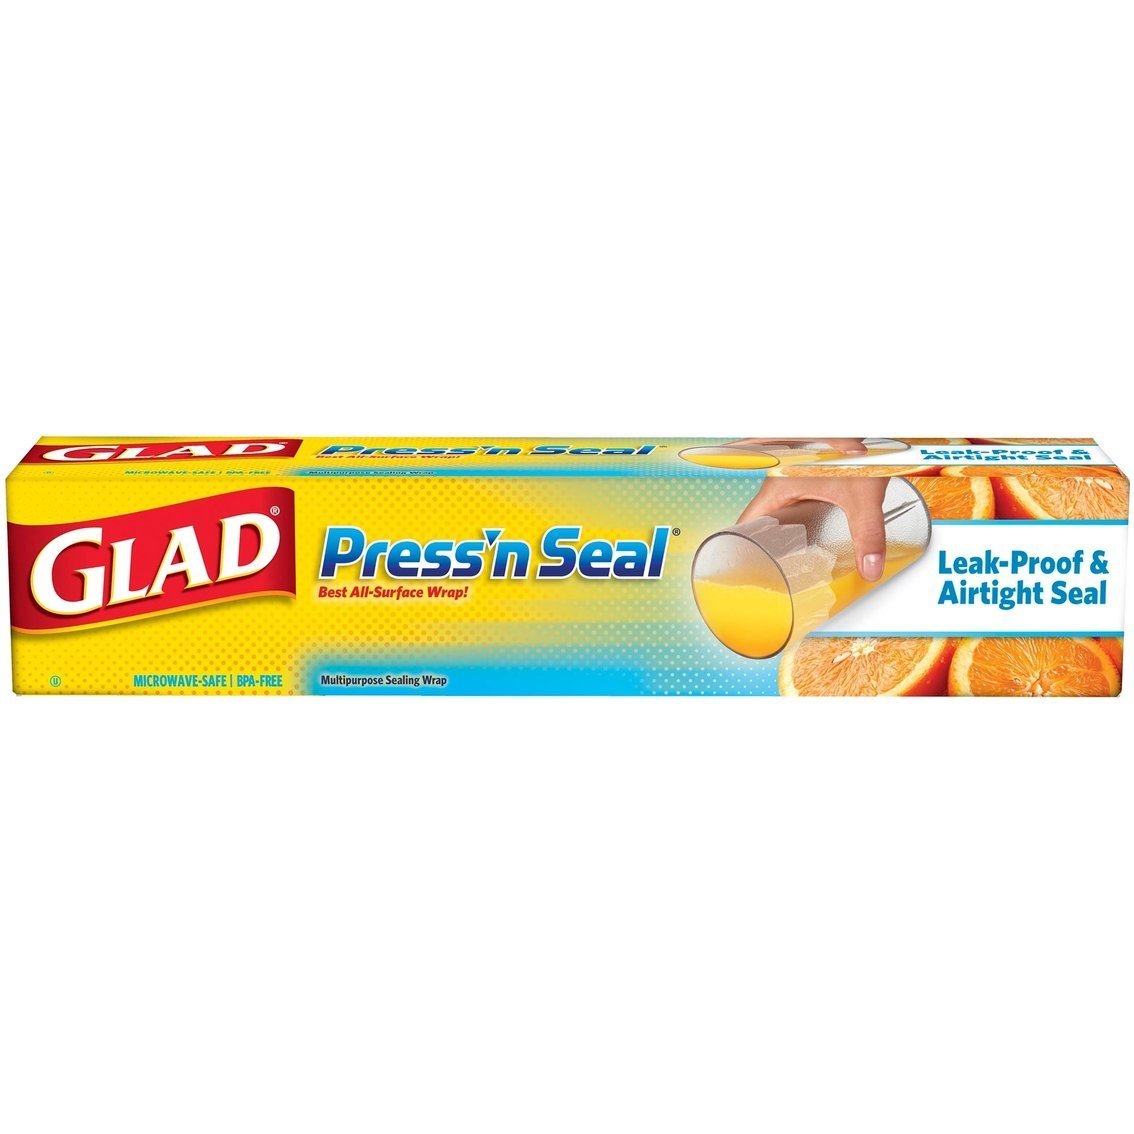 bvi>Glad Press'n Seal Wrap - 70 sq ft